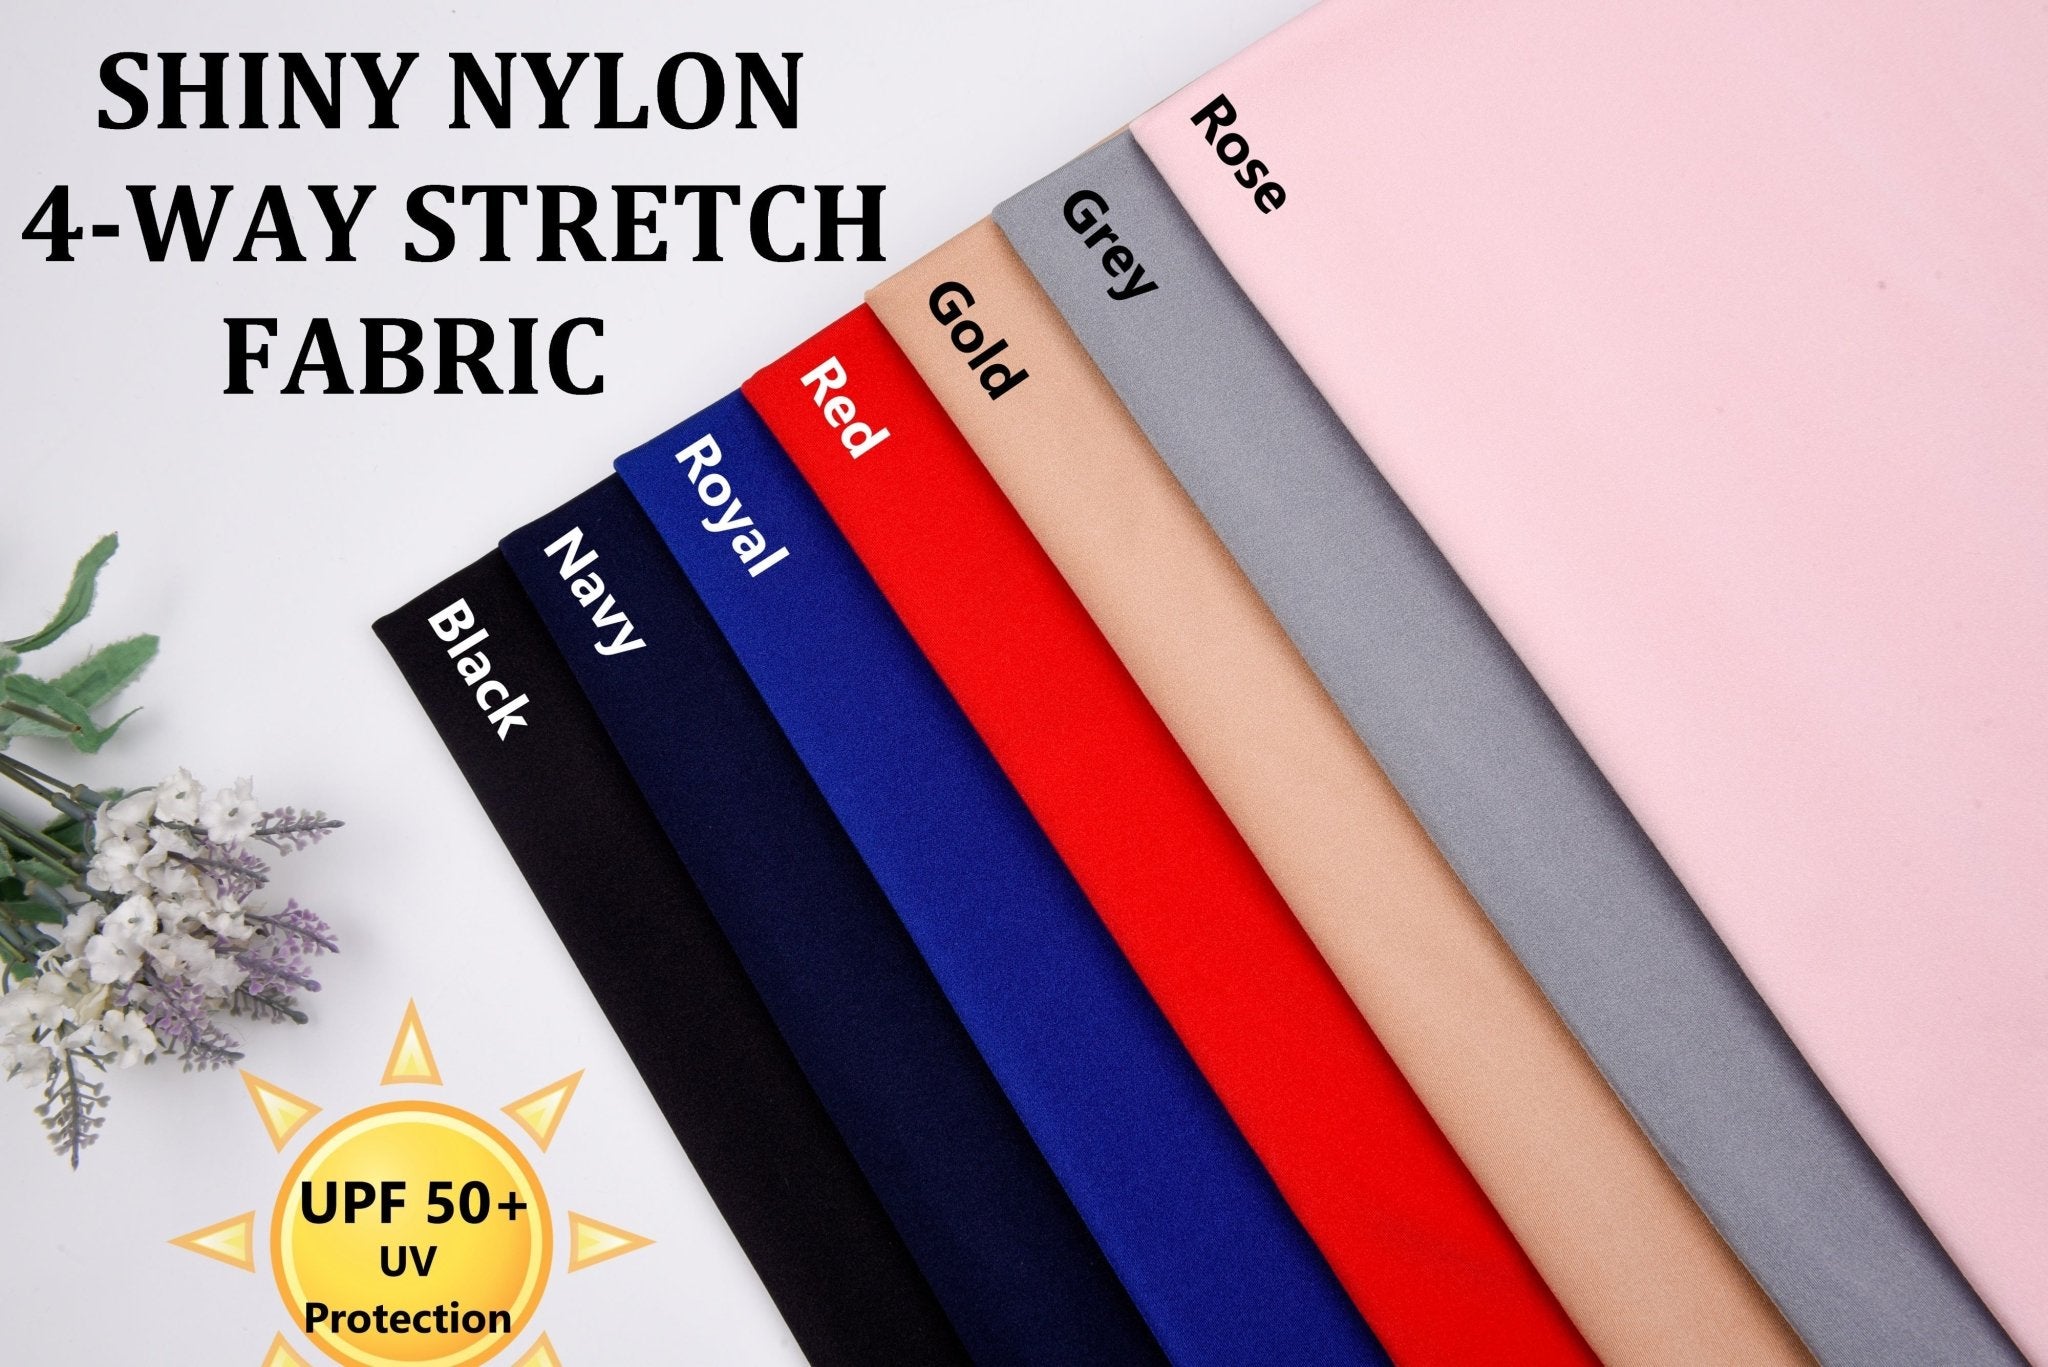 Good 4 Colour Choosing Swimming Suits Fabric 4 Ways Stretch Knit Spandex/ cotton/nylon Fabric Diy Sewing Swimsuit Dress T-shirt - Fabric - AliExpress